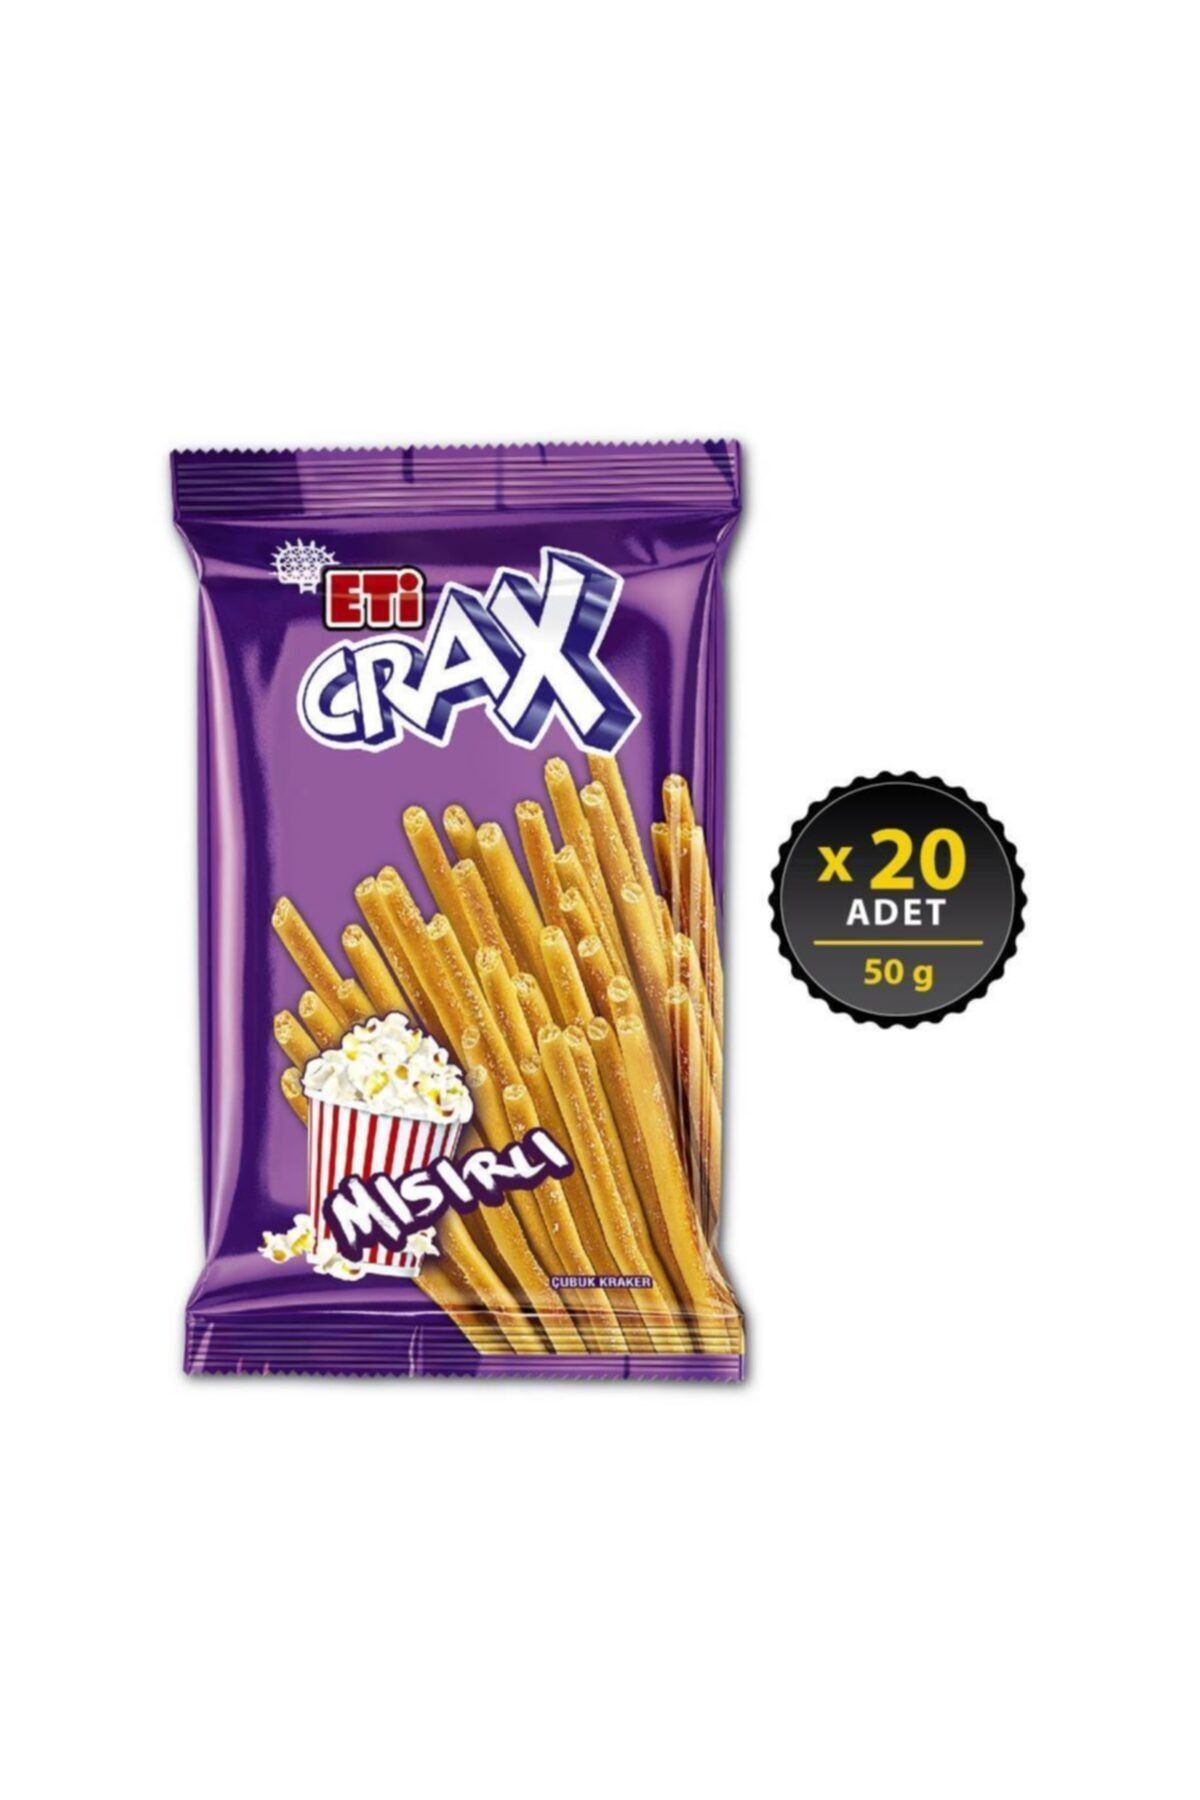 Eti Crax Mısırlı Çubuk Kraker 50 g x 20 Adet